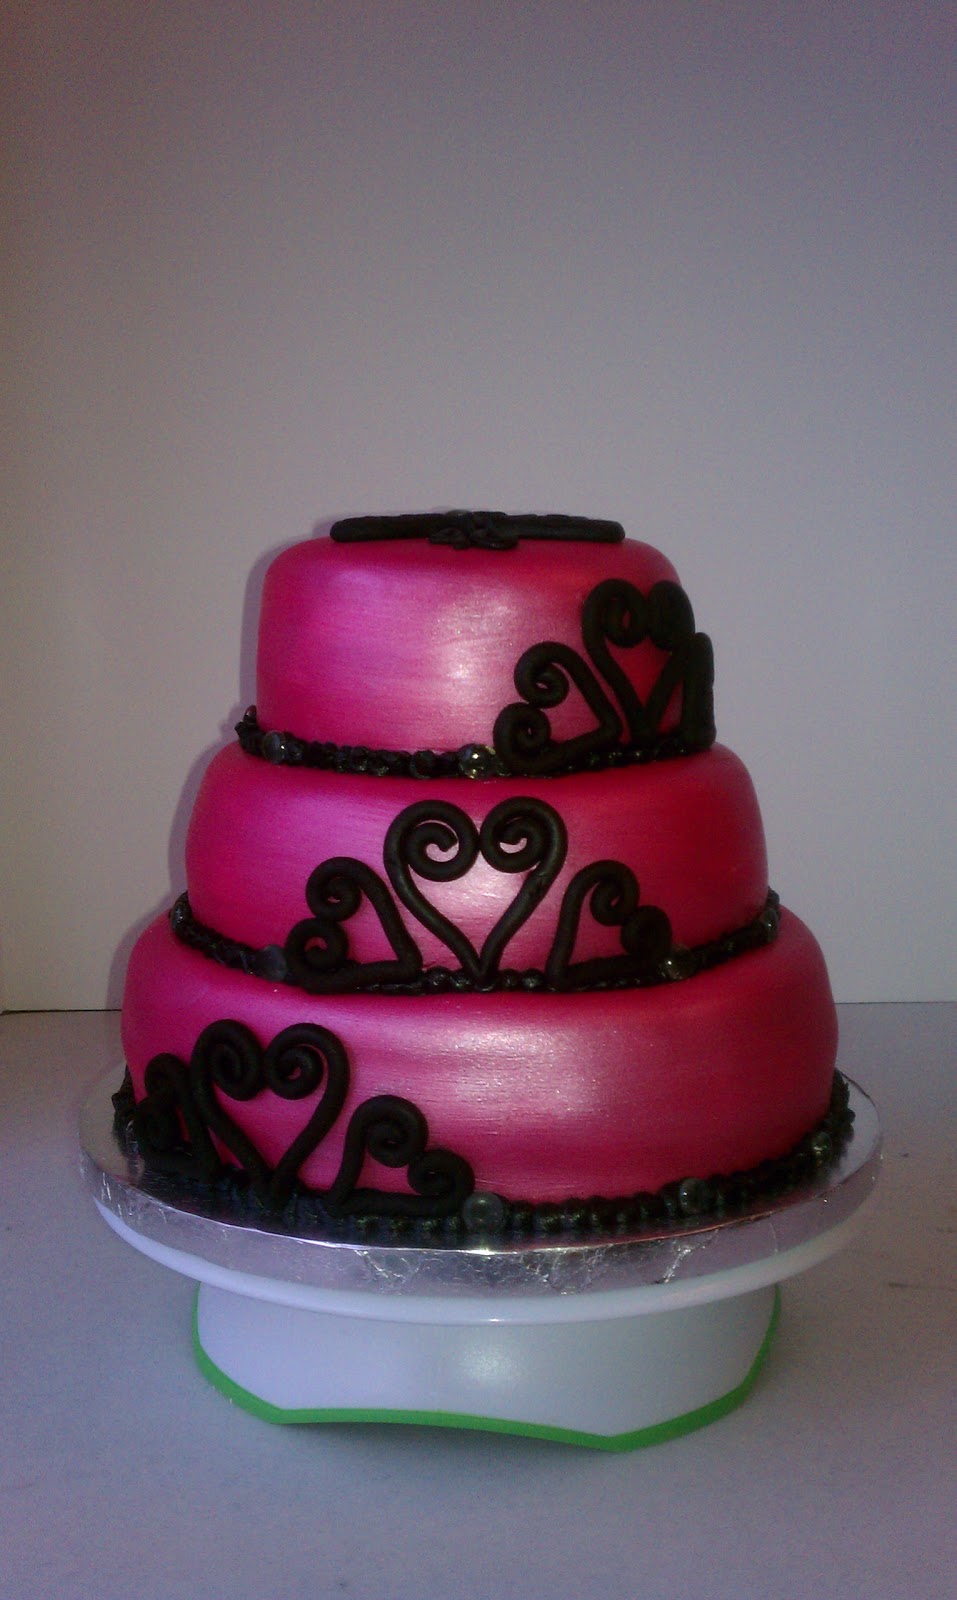 40th birthday cakes for women | themecakesbytraci.com ...